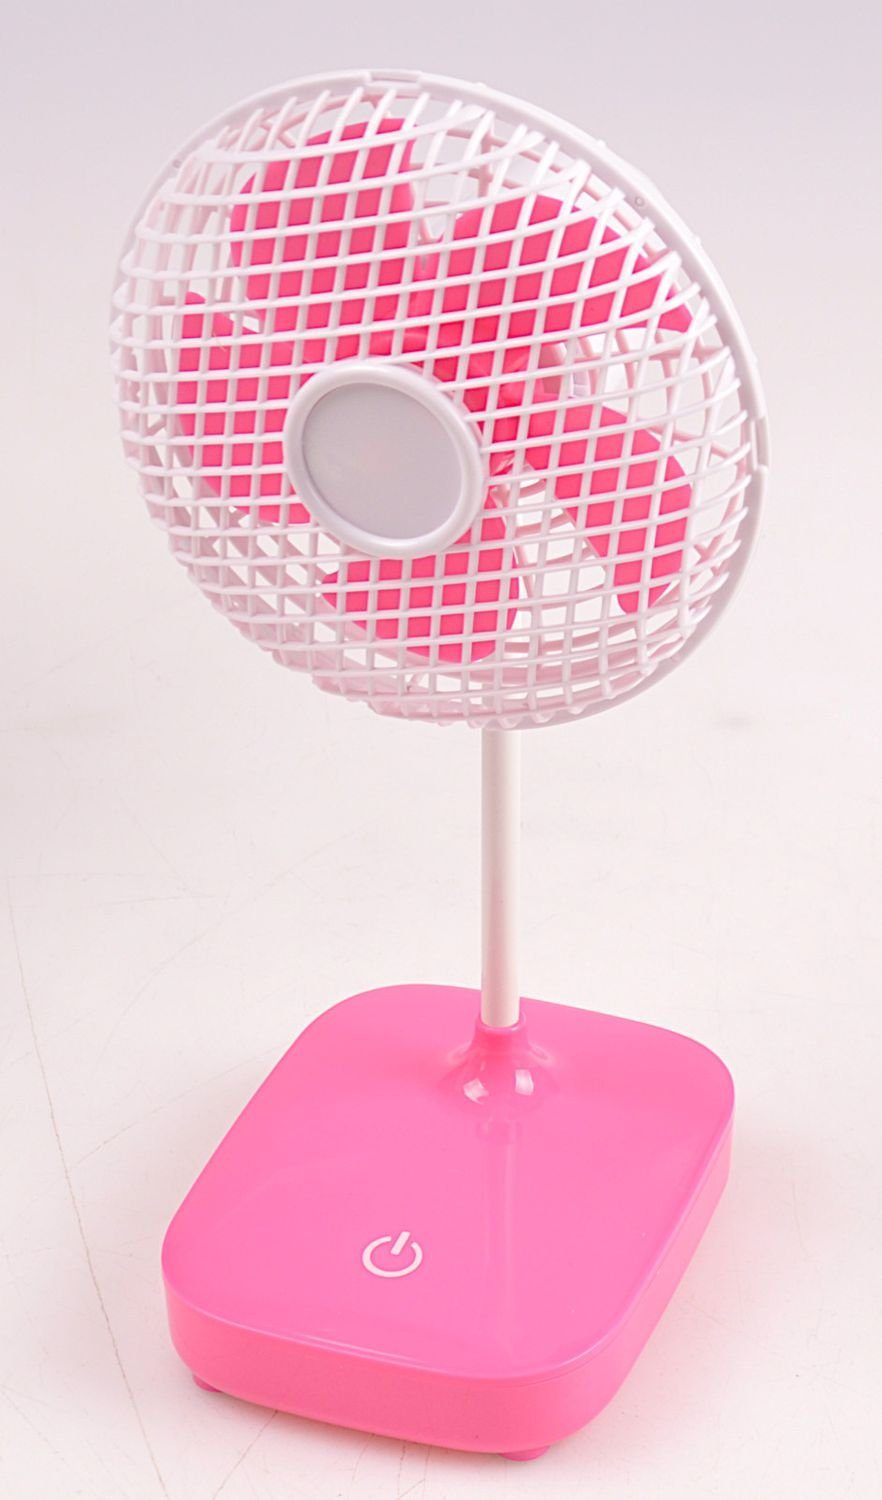 BURI Standventilator Mini-Ventilator Ø13cm Tischventilator Lüfter Kühler Gebläse rosa